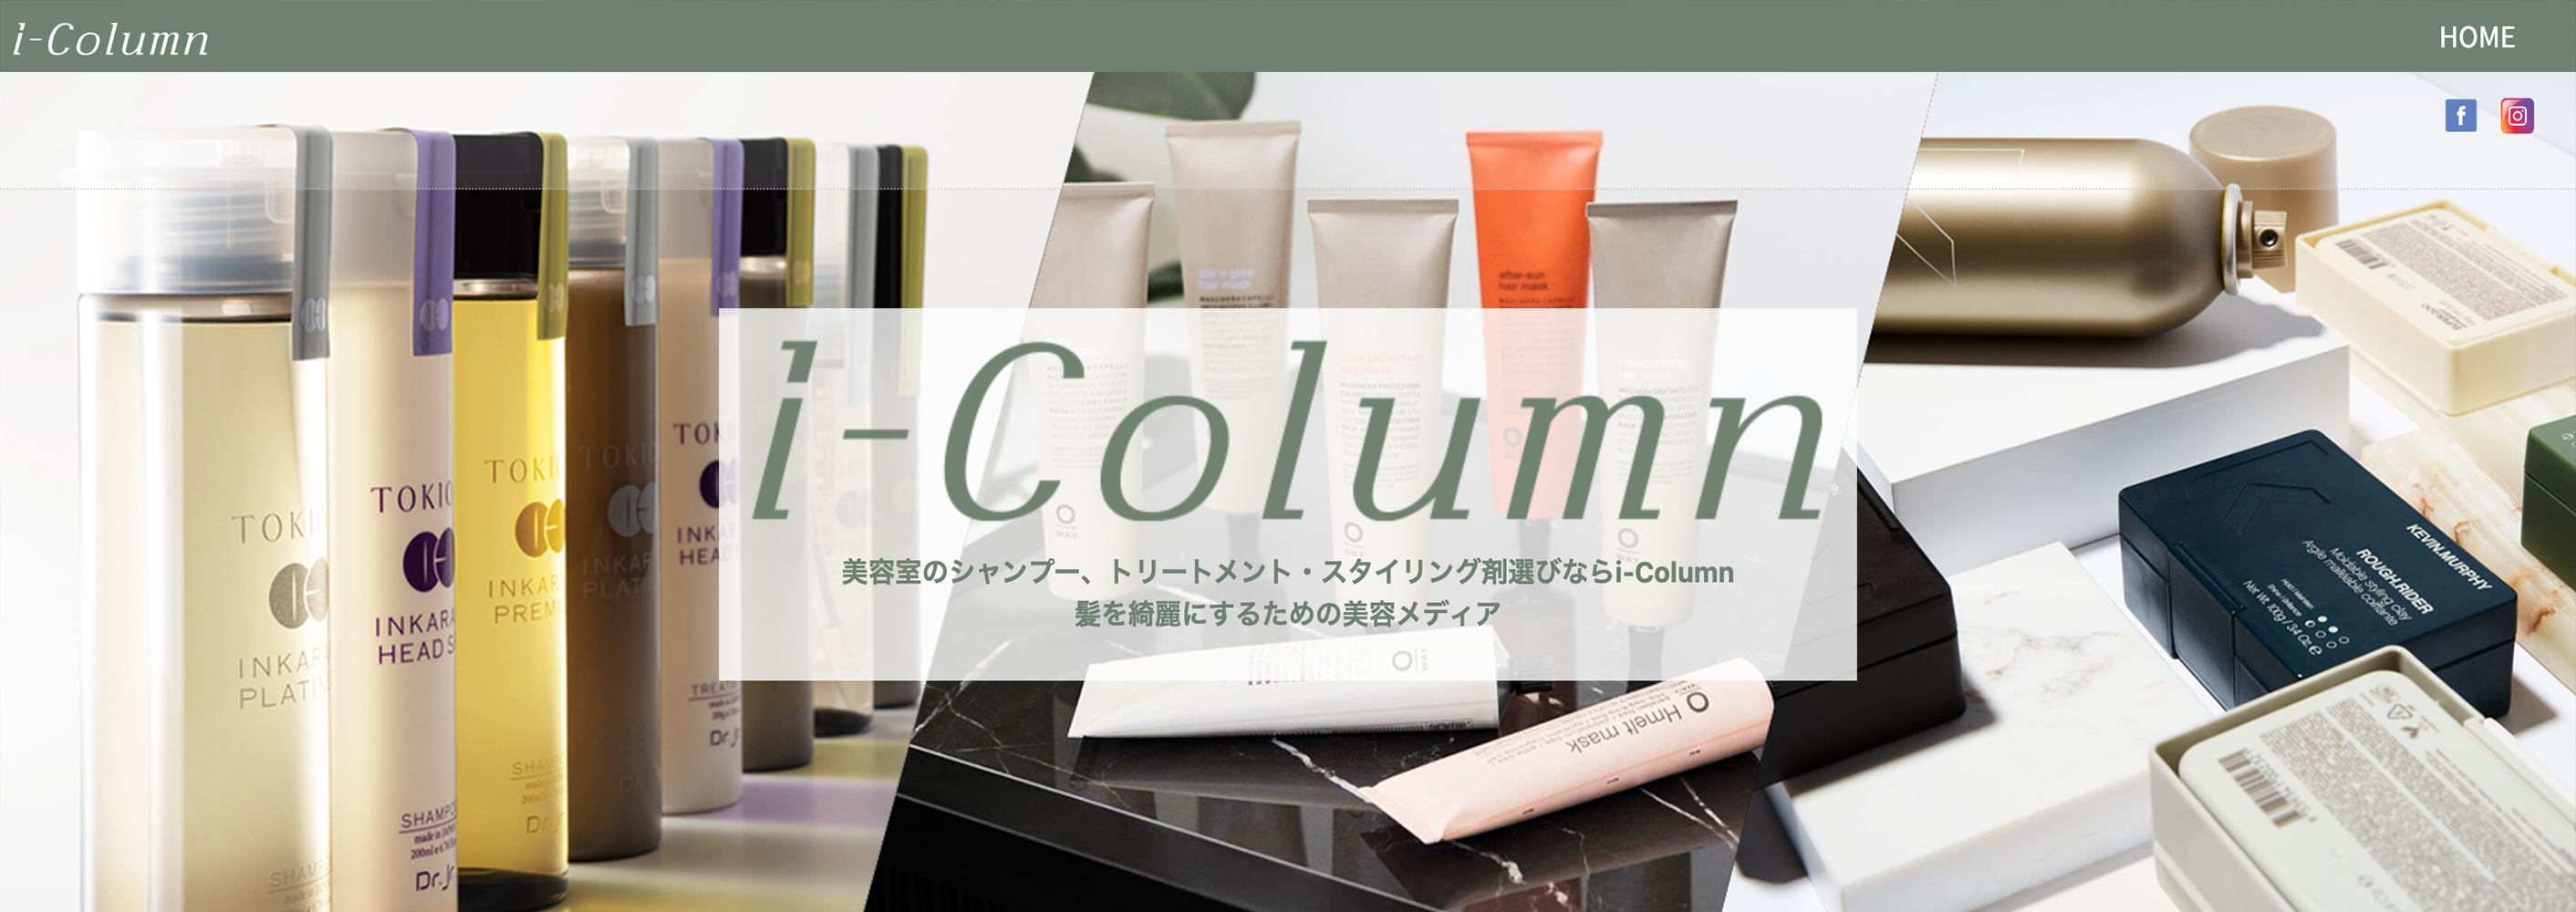 i-Column